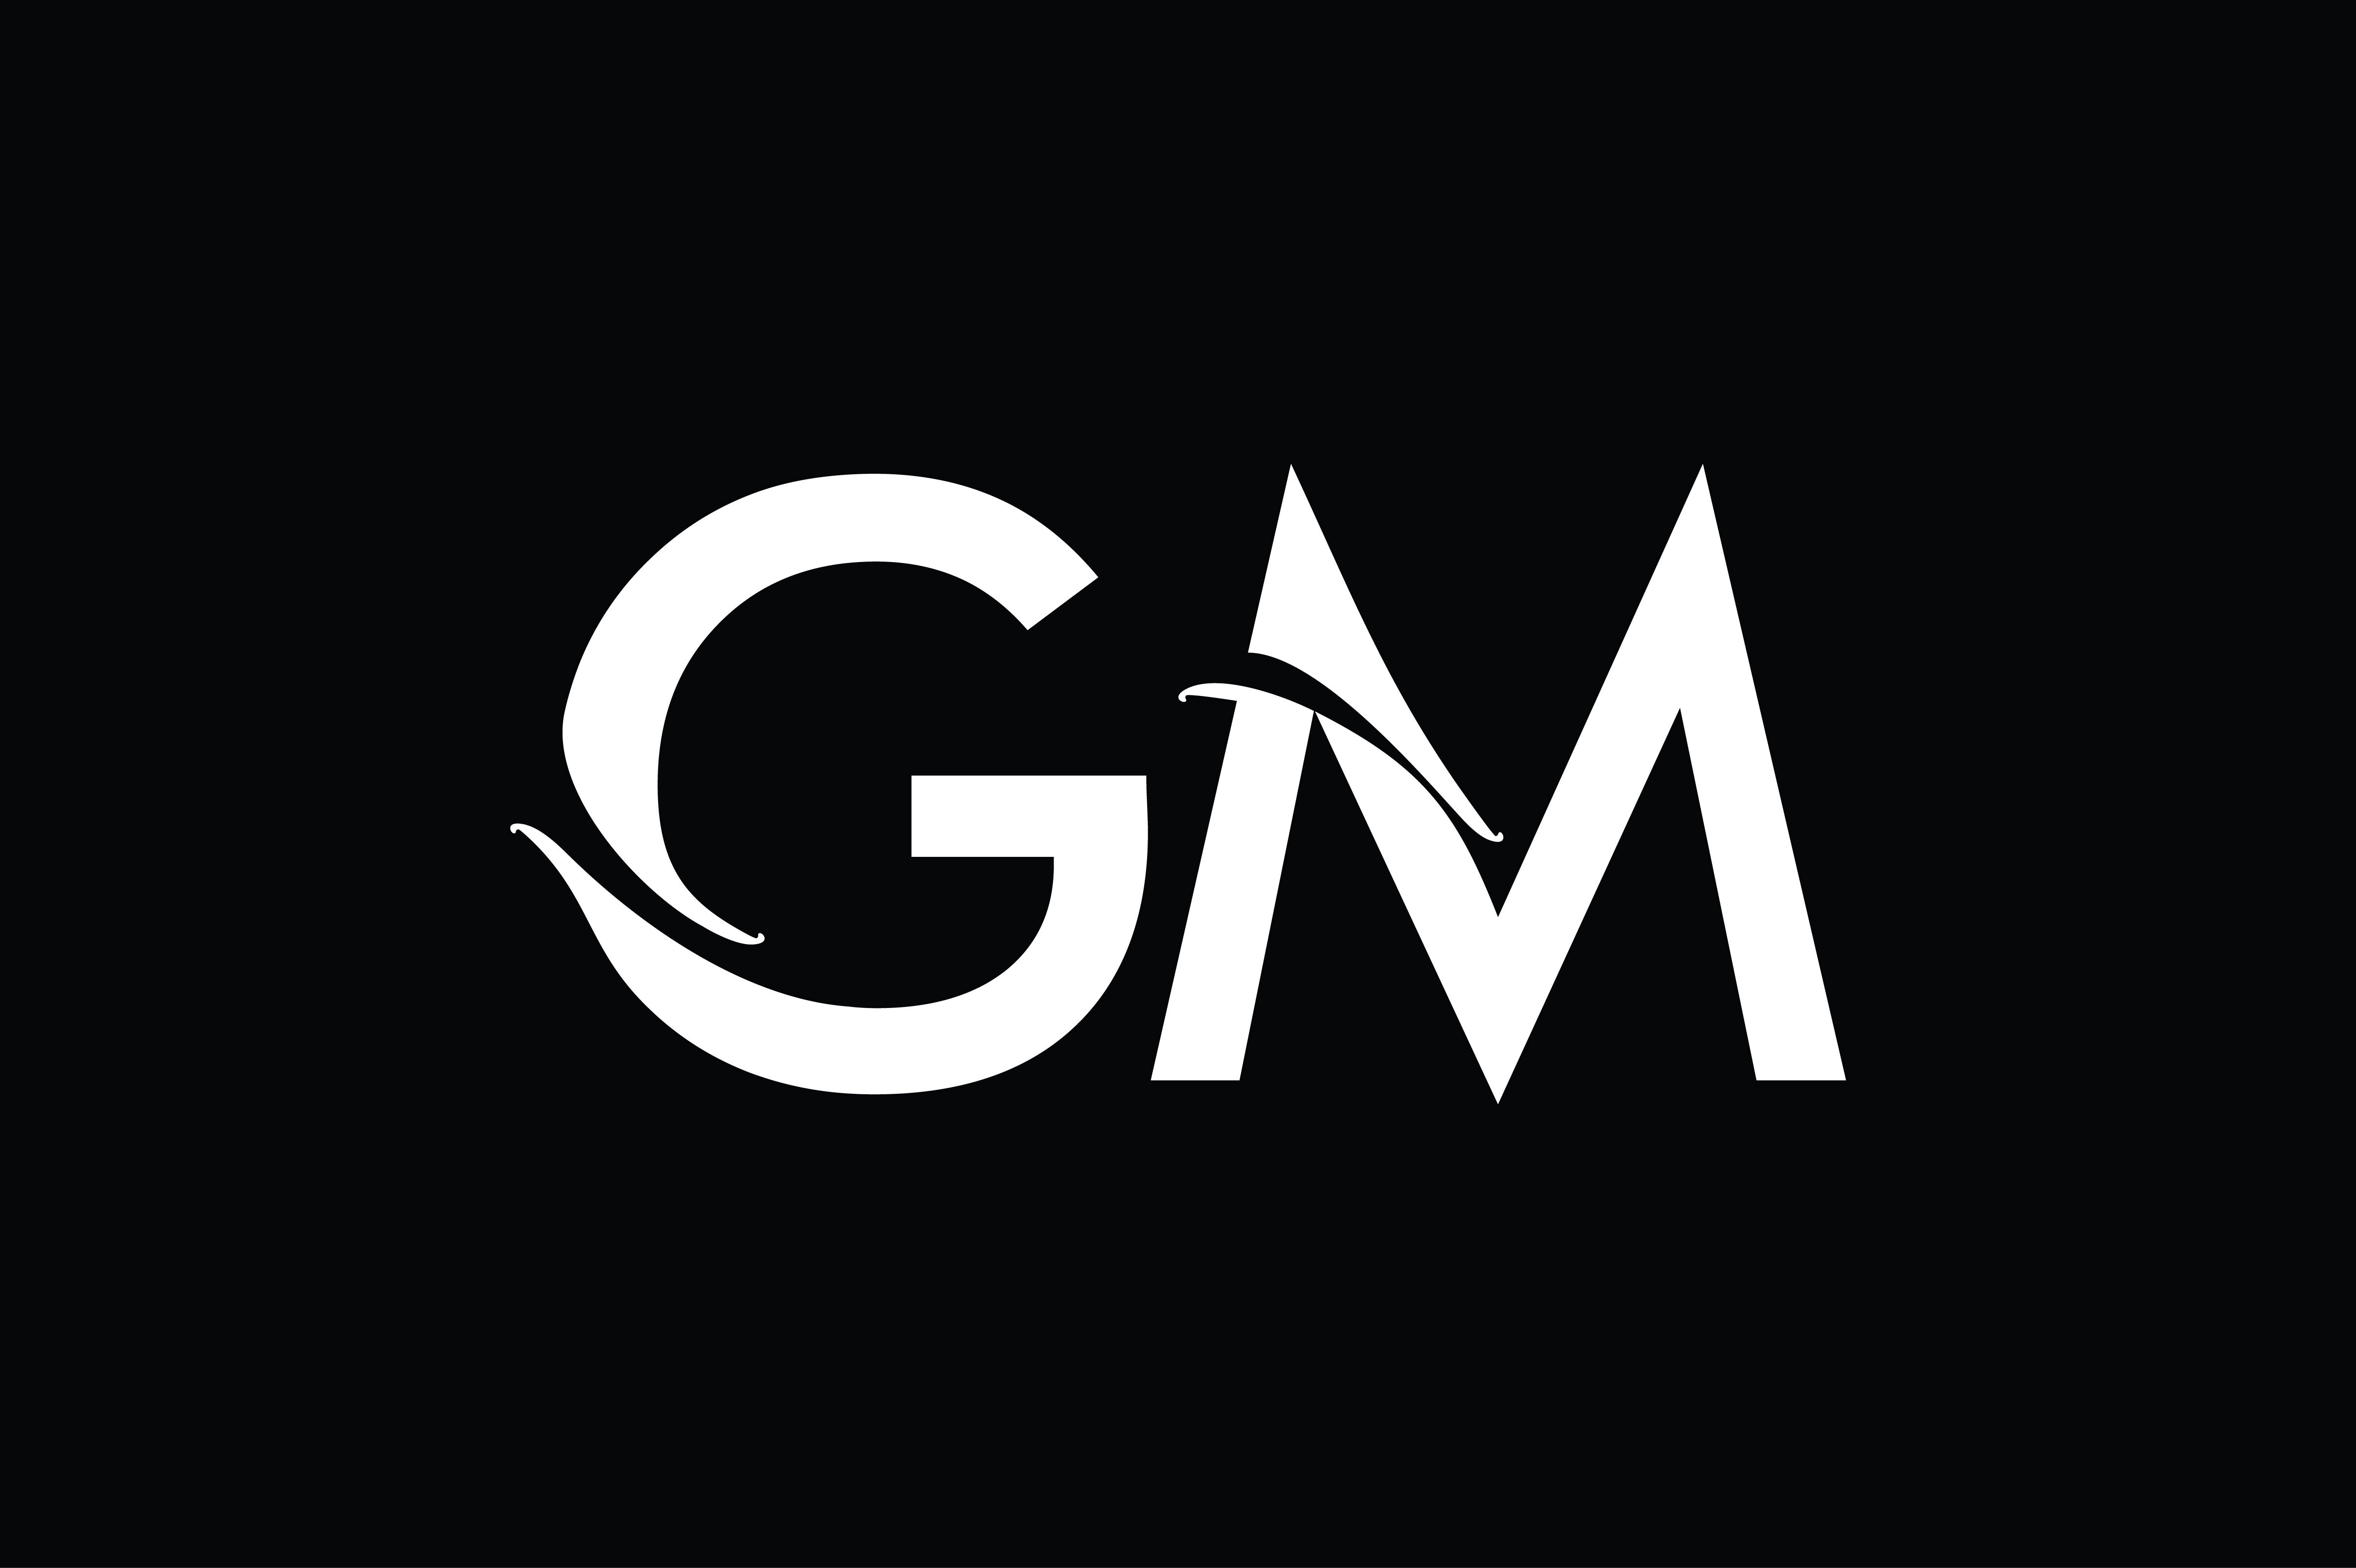 gm monogram logo